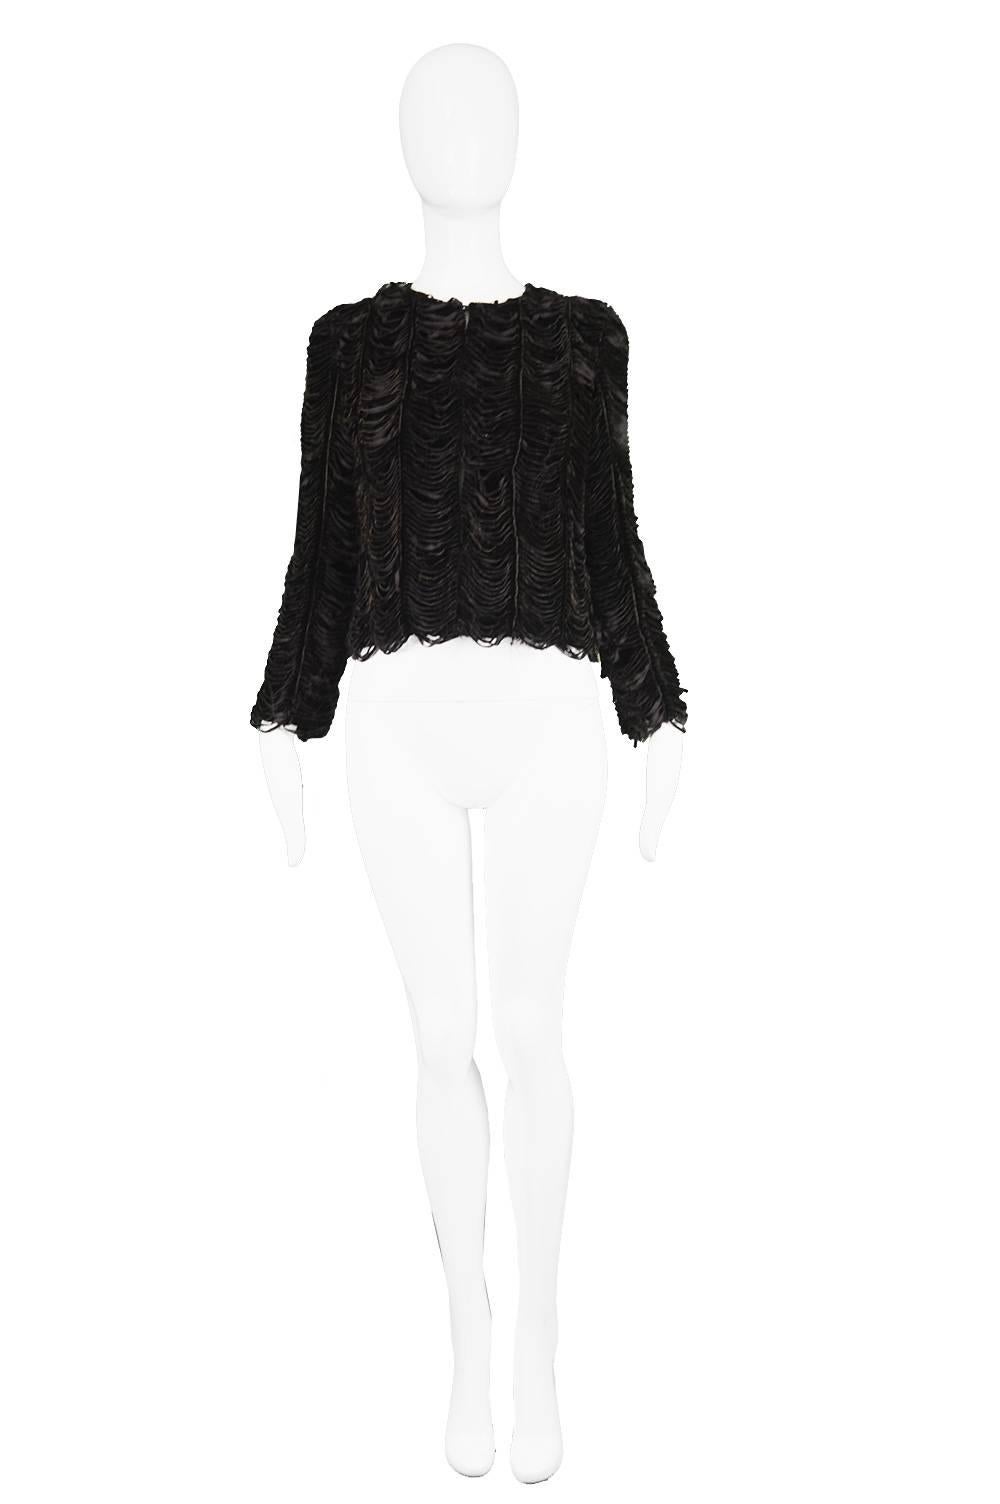 Jean Paul Gaultier Vintage 1990's Shredded Distressed Black Velvet Jacket

Estimated Size: Women's UK 8-10/ US 4-6/ EU 36-38. Please check measurements.
Bust - 34” / 86cm
Waist - 32” / 81cm
Length (Shoulder to Hem) - 18” / 46cm
Shoulder to Shoulder